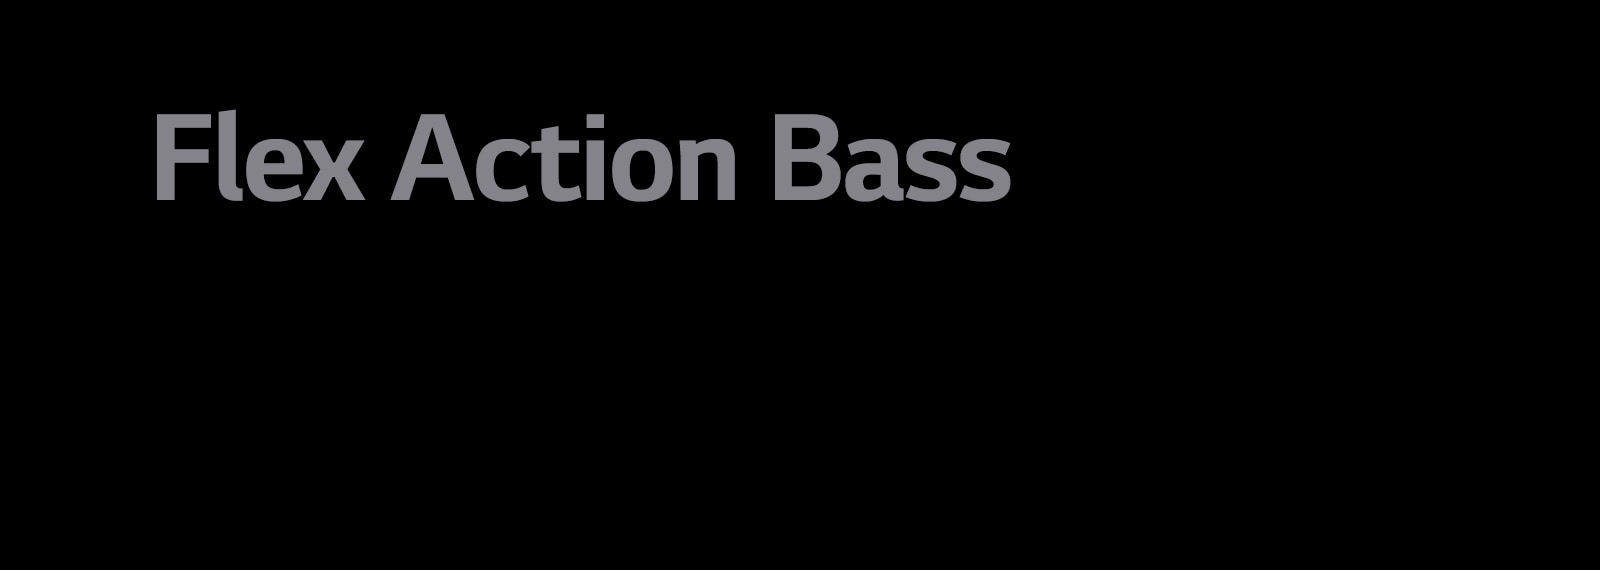 Teksts “Flex Action Bass”